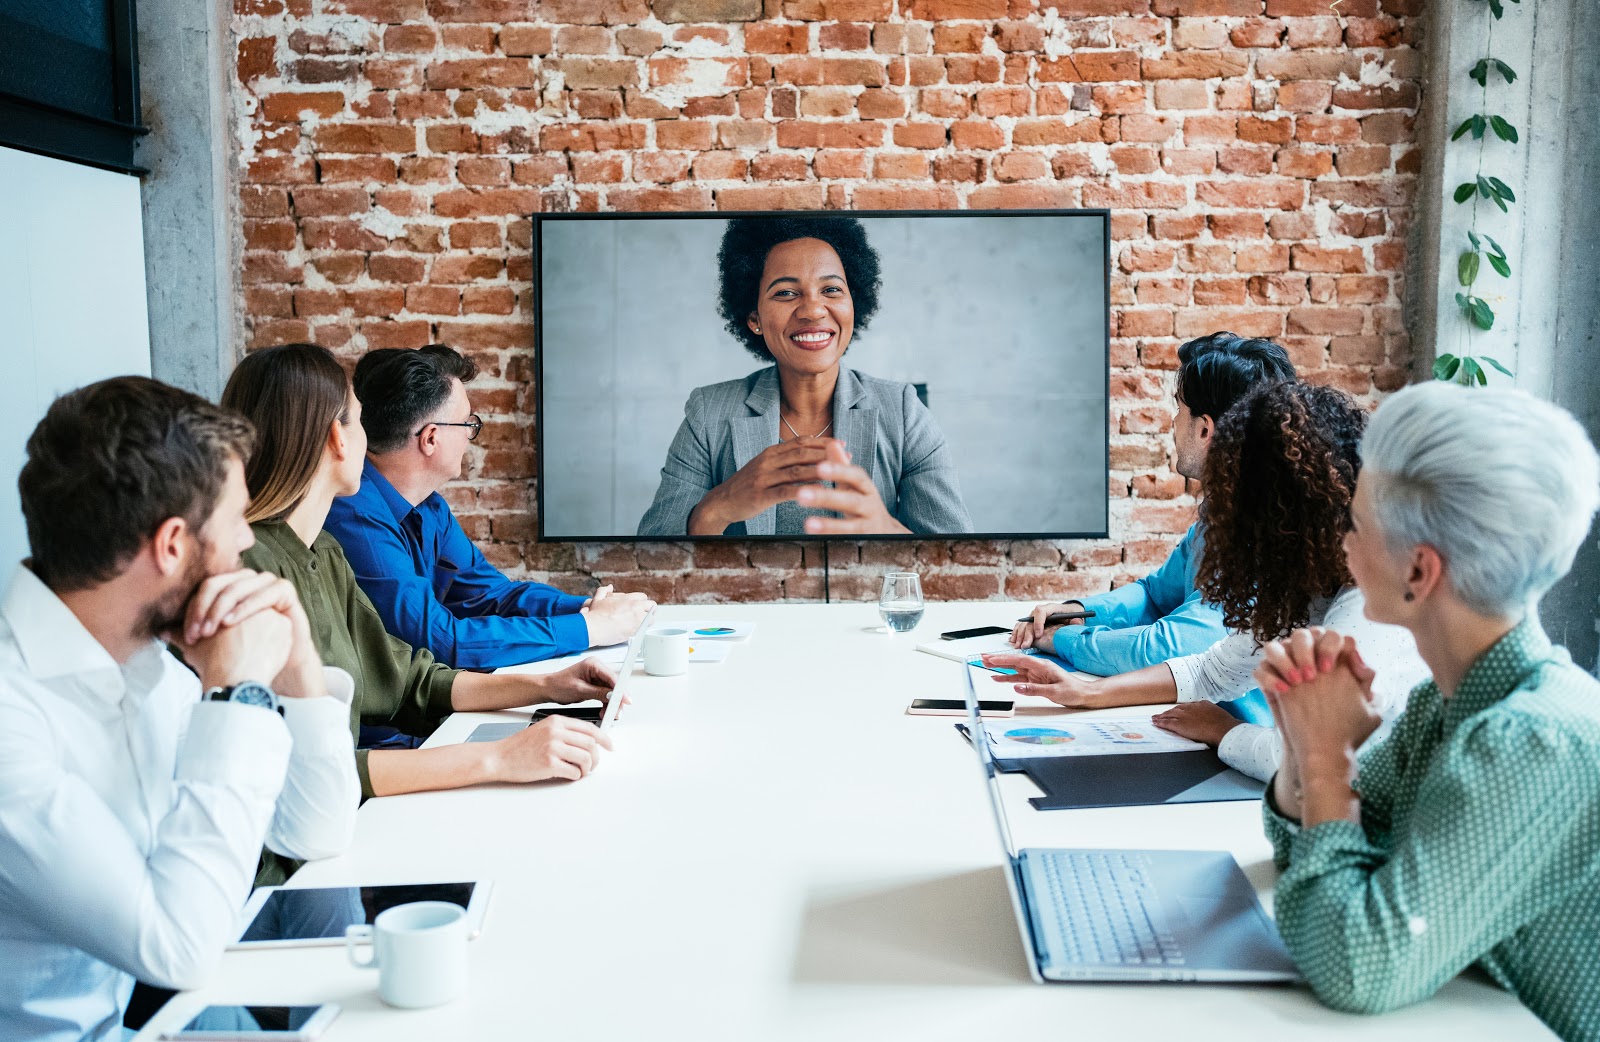 vymeet视频会议积极创新更高效的线上会议模式